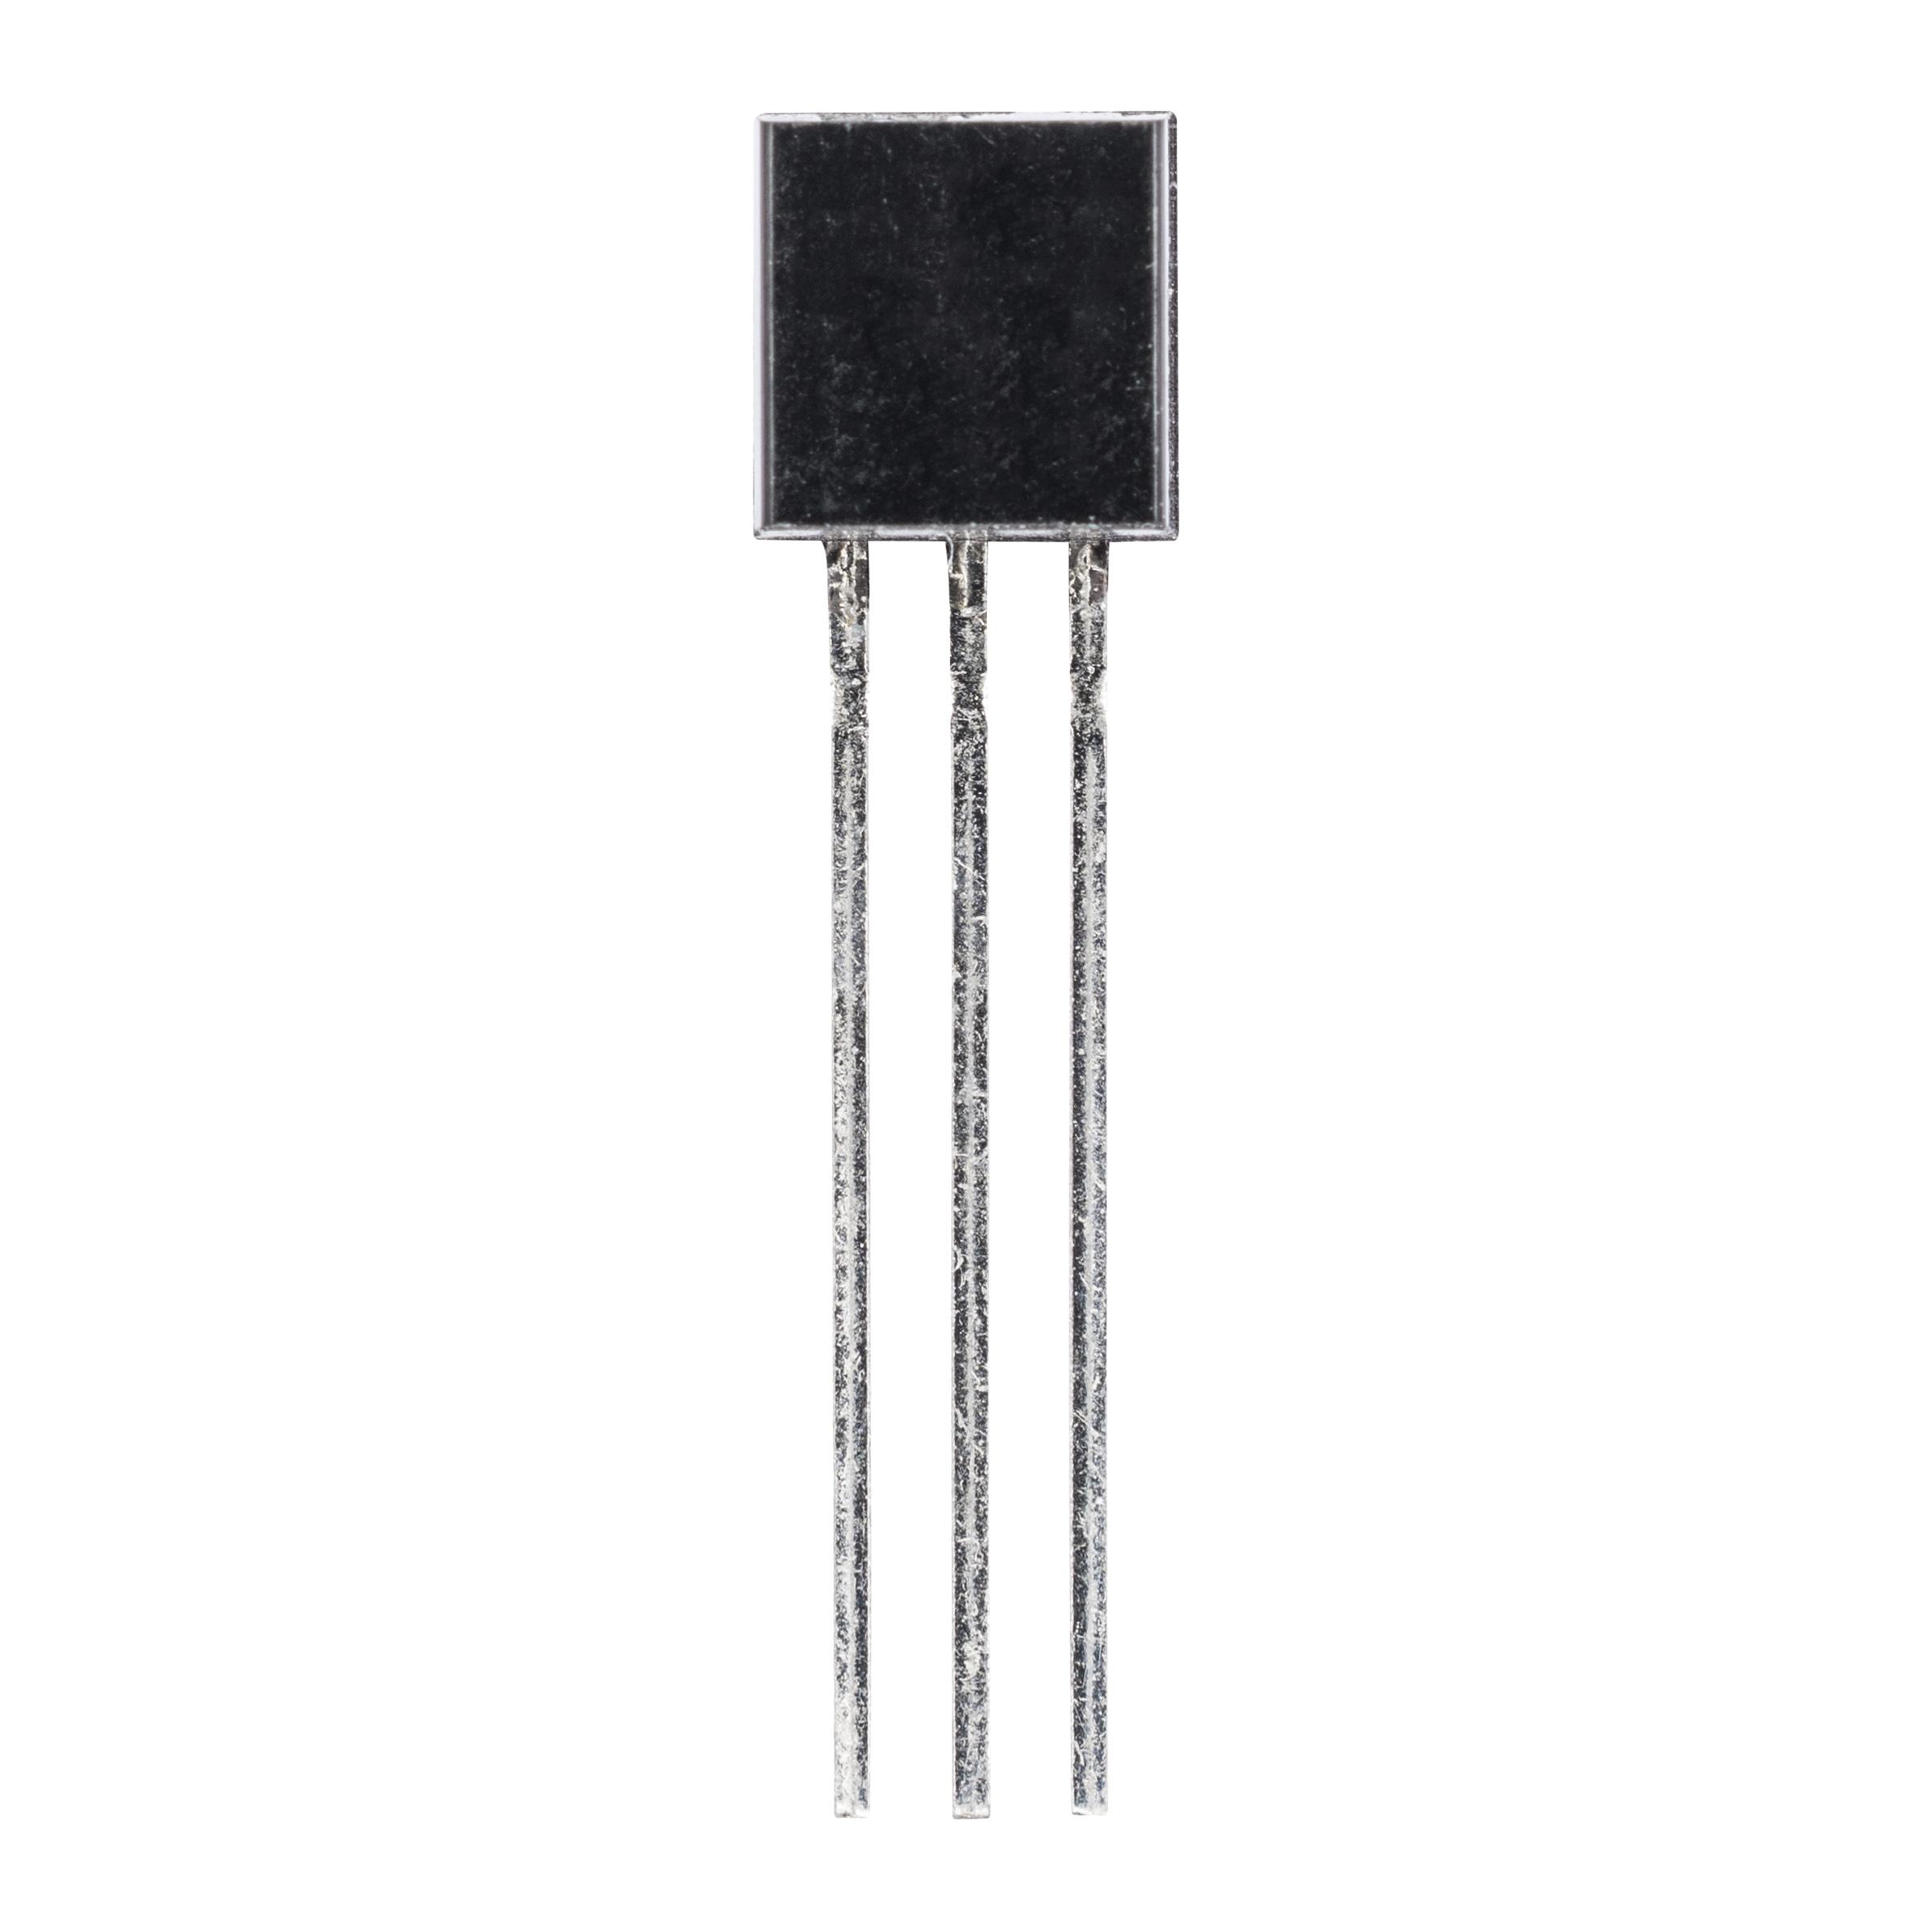 2N2222A (TO-92) (Bipolartransistor NPN)